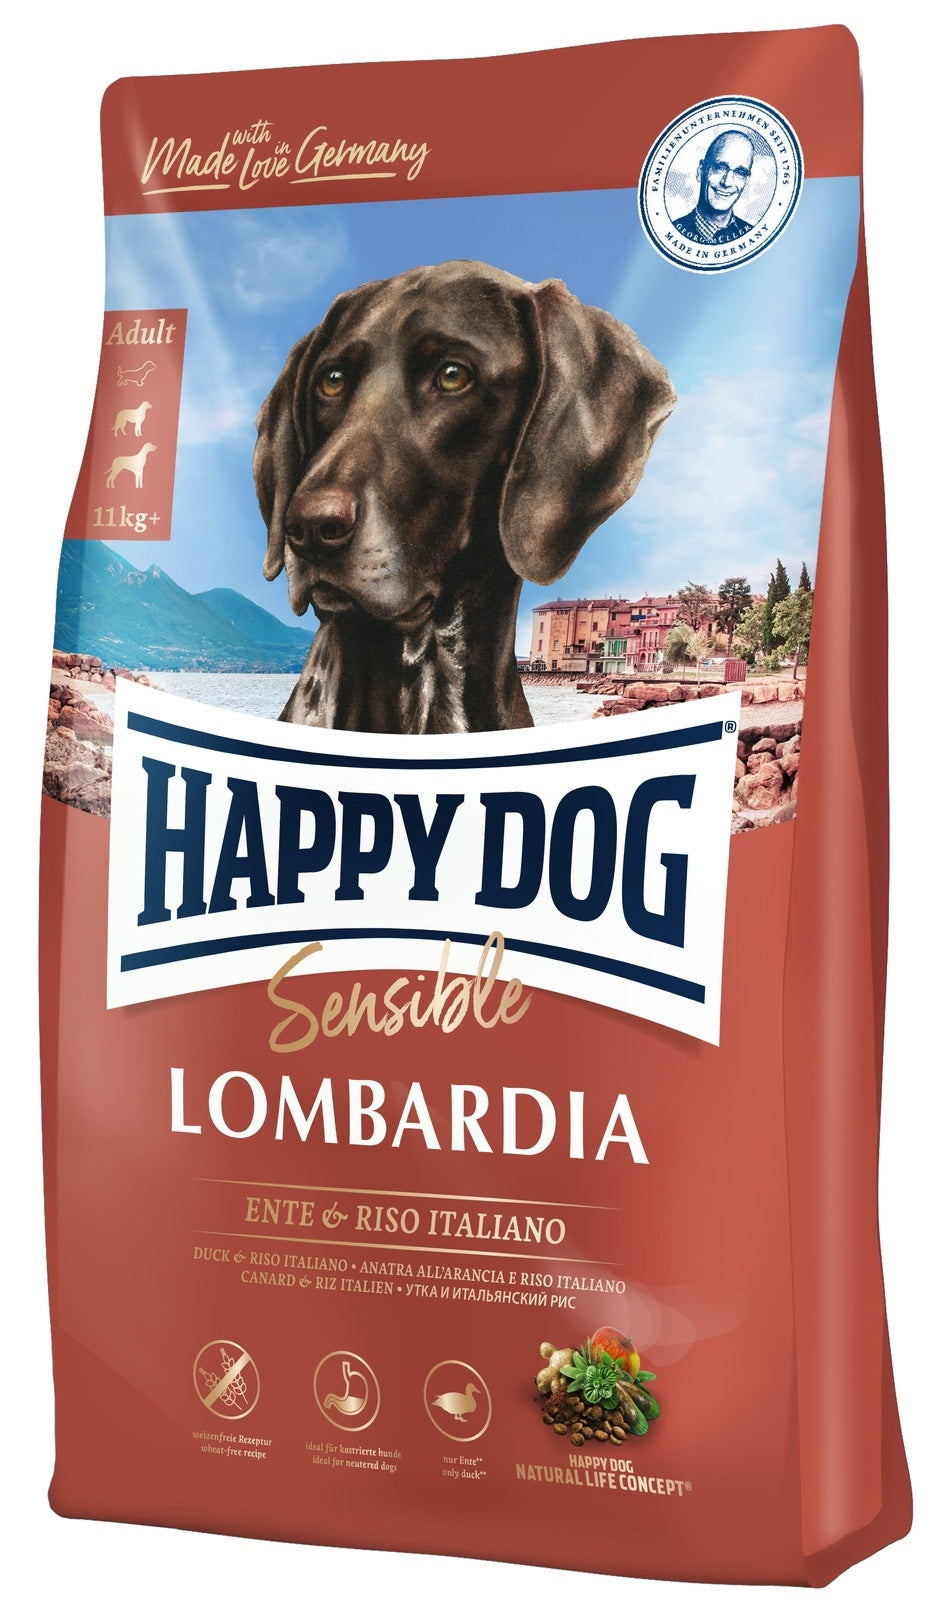 Happy Dog Sensible Lombardia - zoo.de